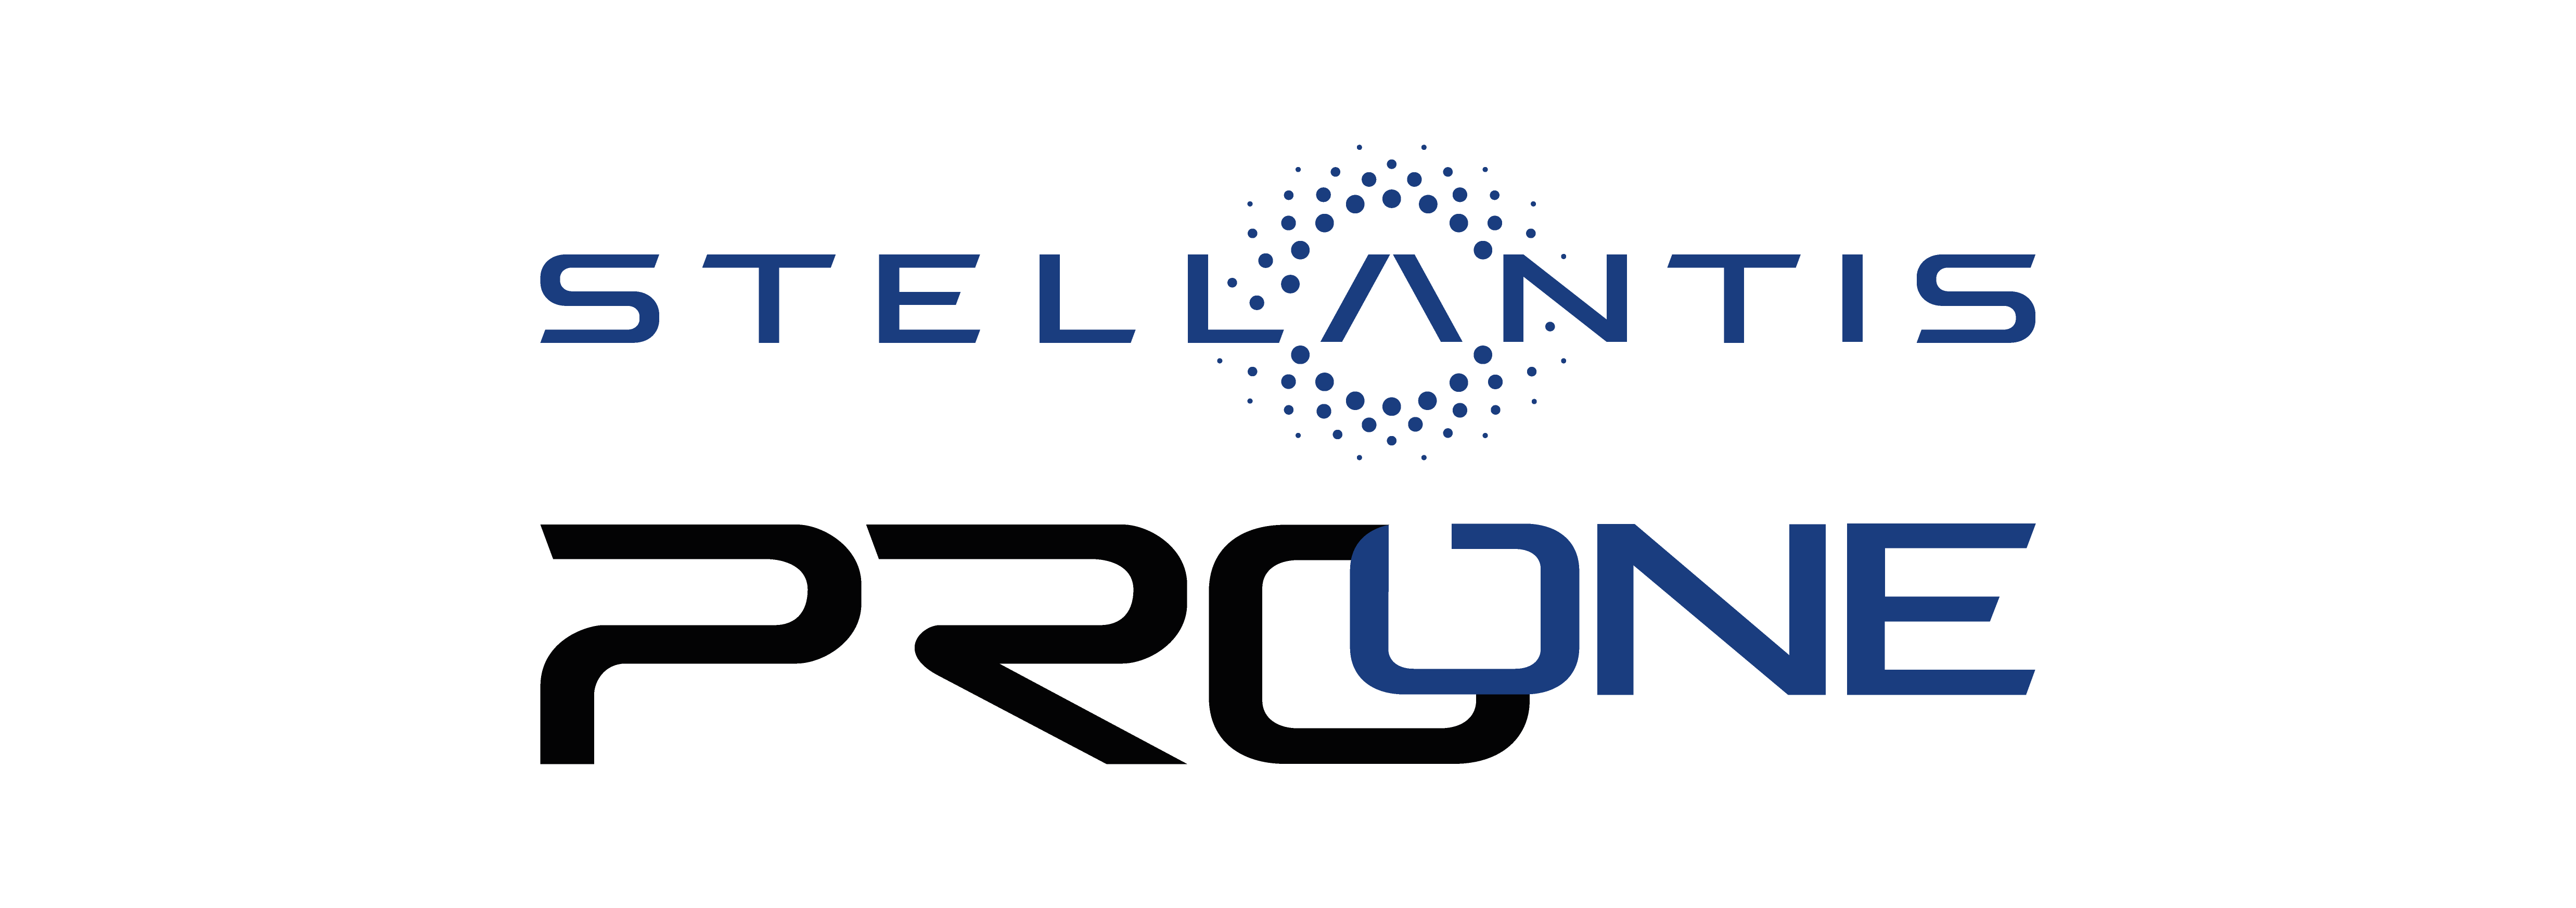 Image of Stellantis Pro One logo